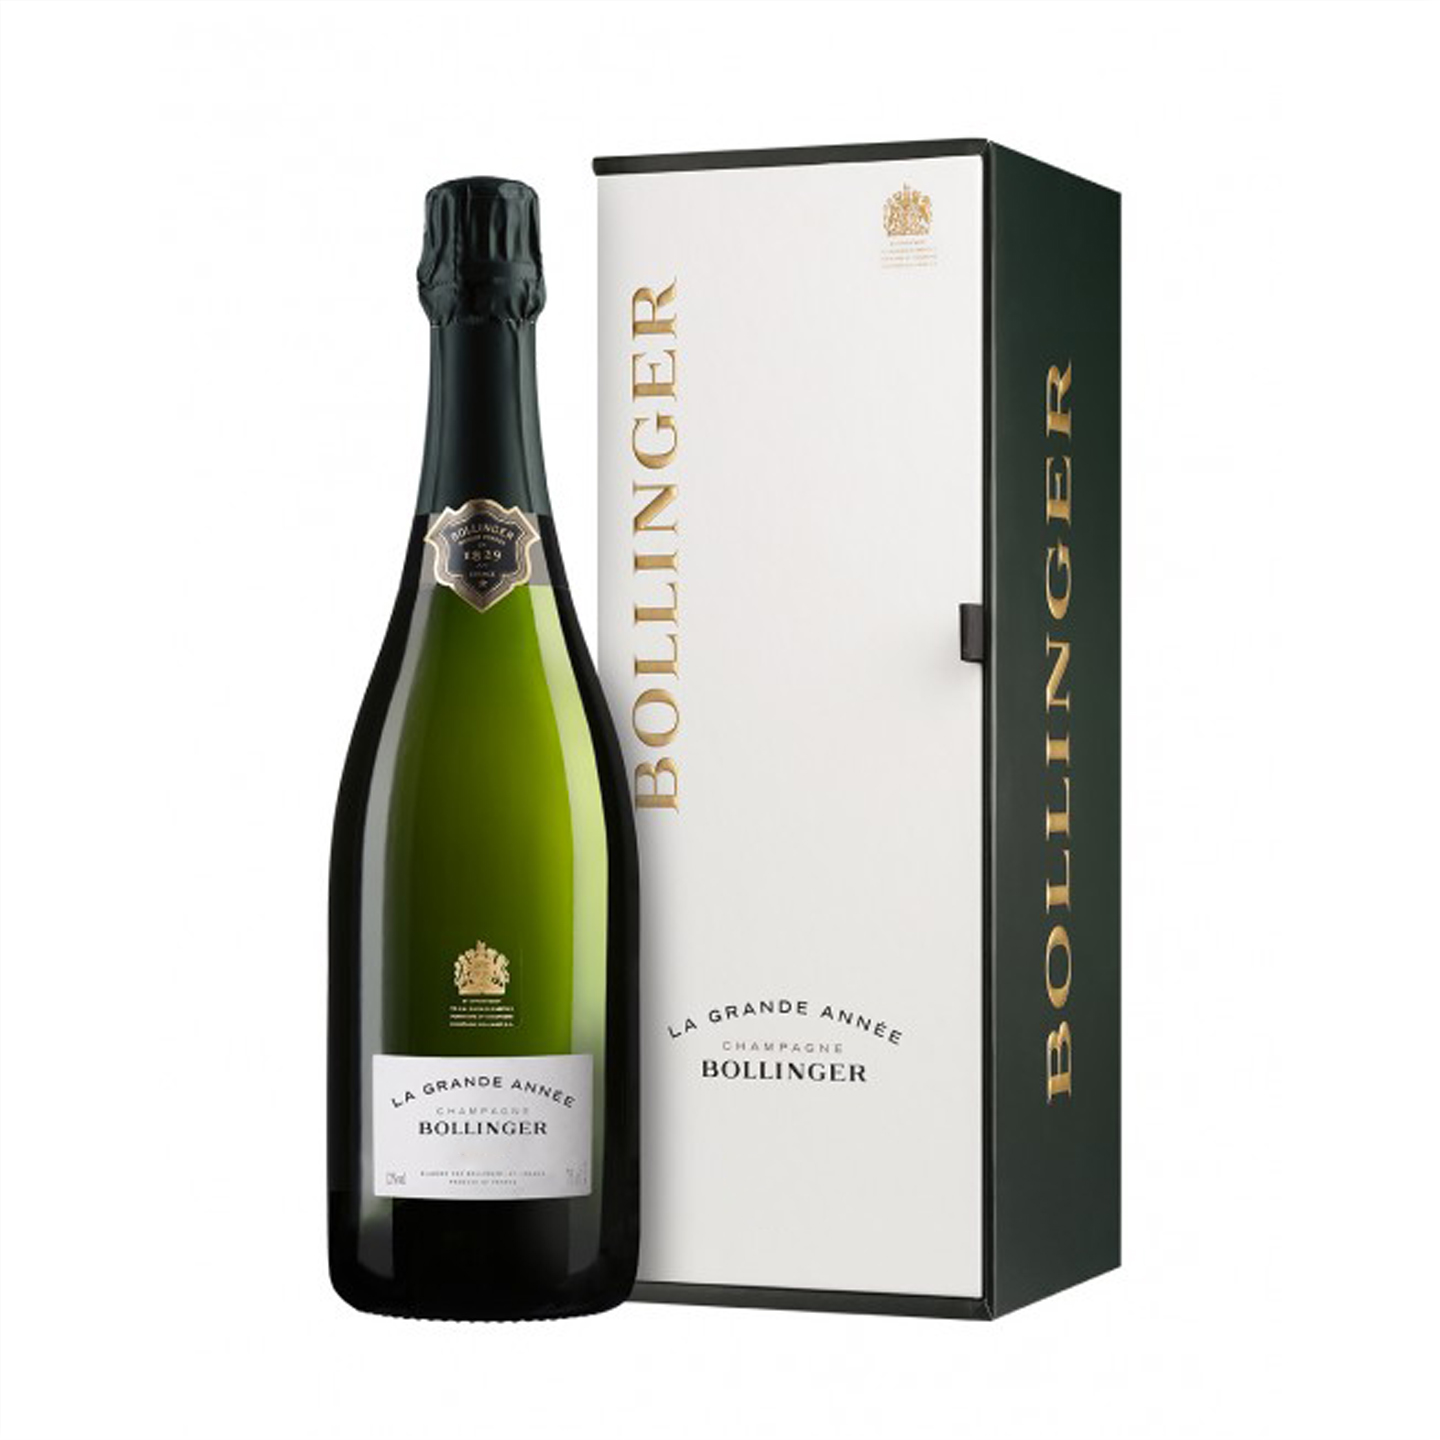 Champagne Bollinger - The Gastronomie House Lyon